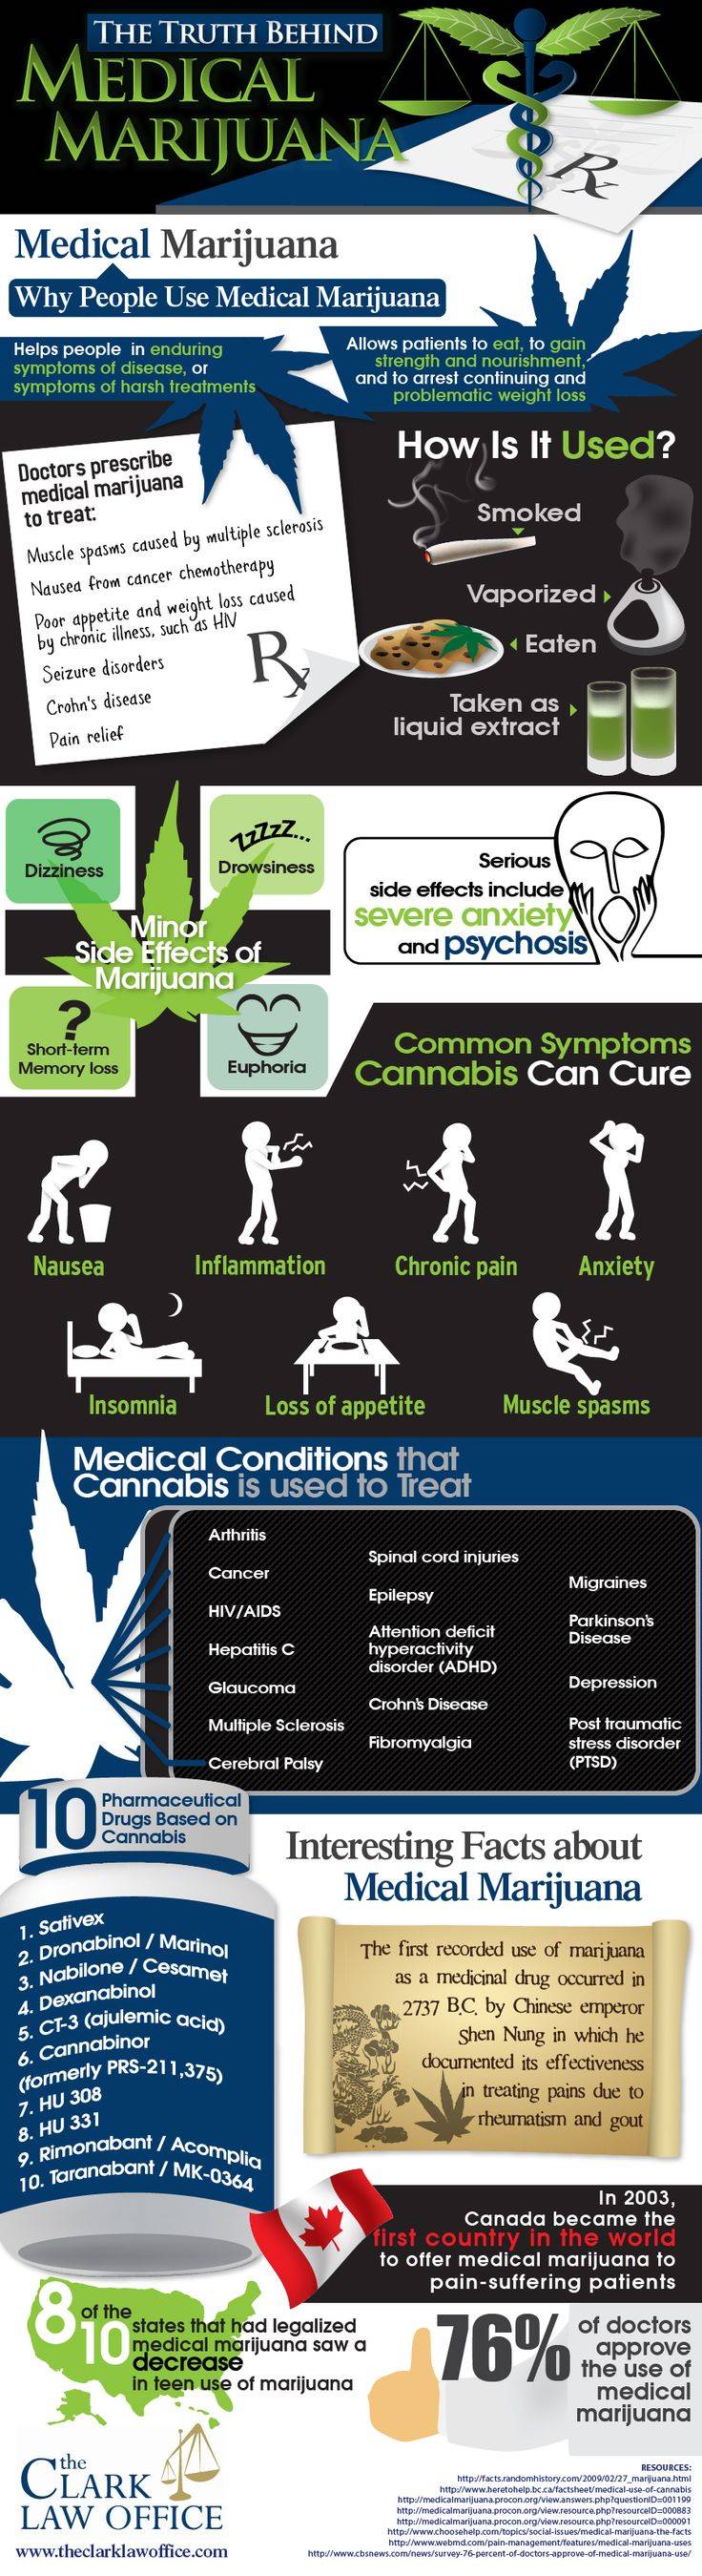 The Truth Behind Medical Marijuana